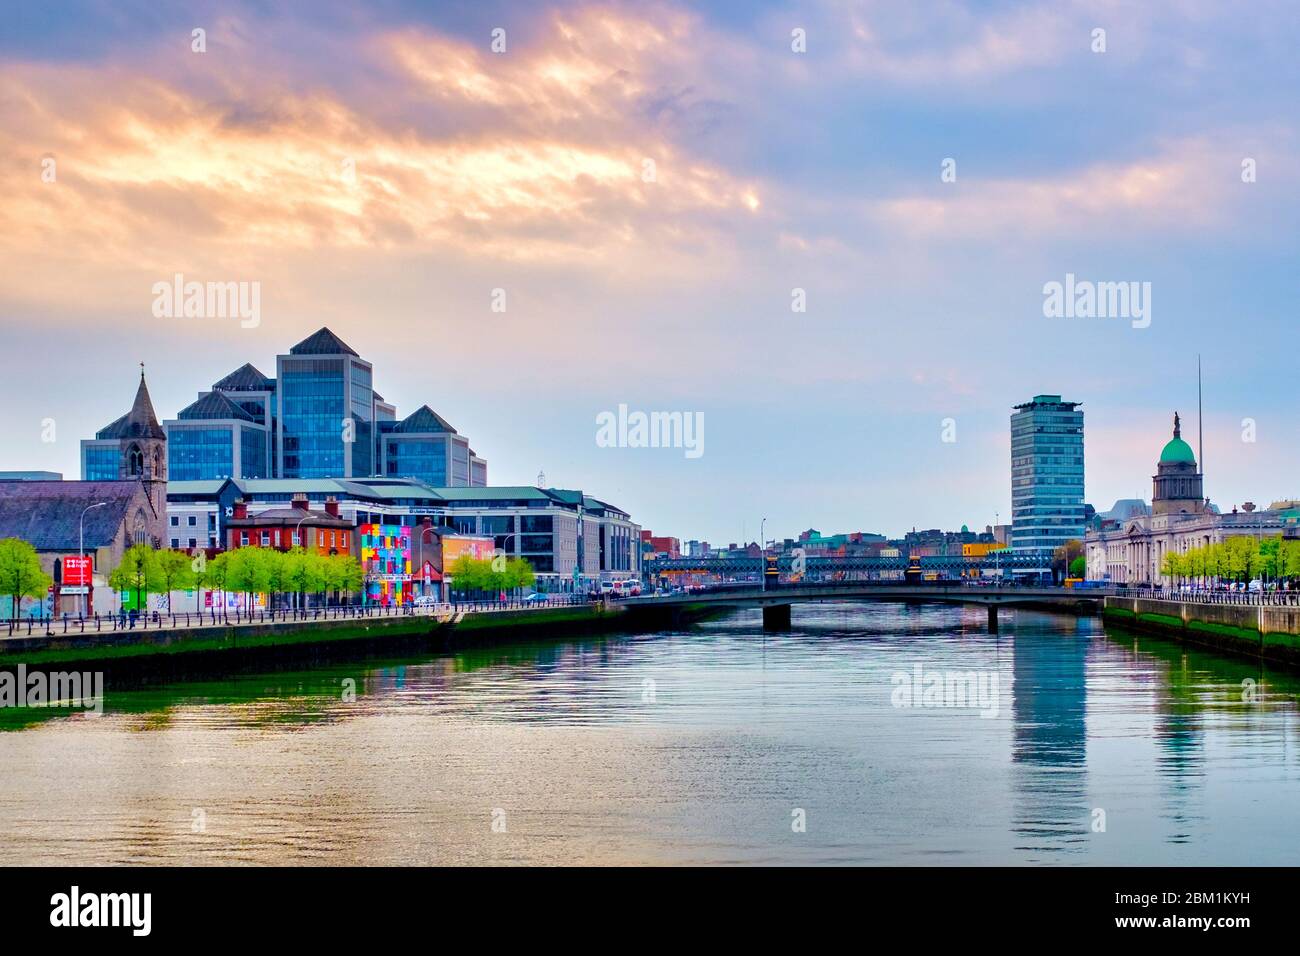 View of the River Liffey from the Samuel Beckett Bridge at sunset, Dublin, Ireland Stock Photo